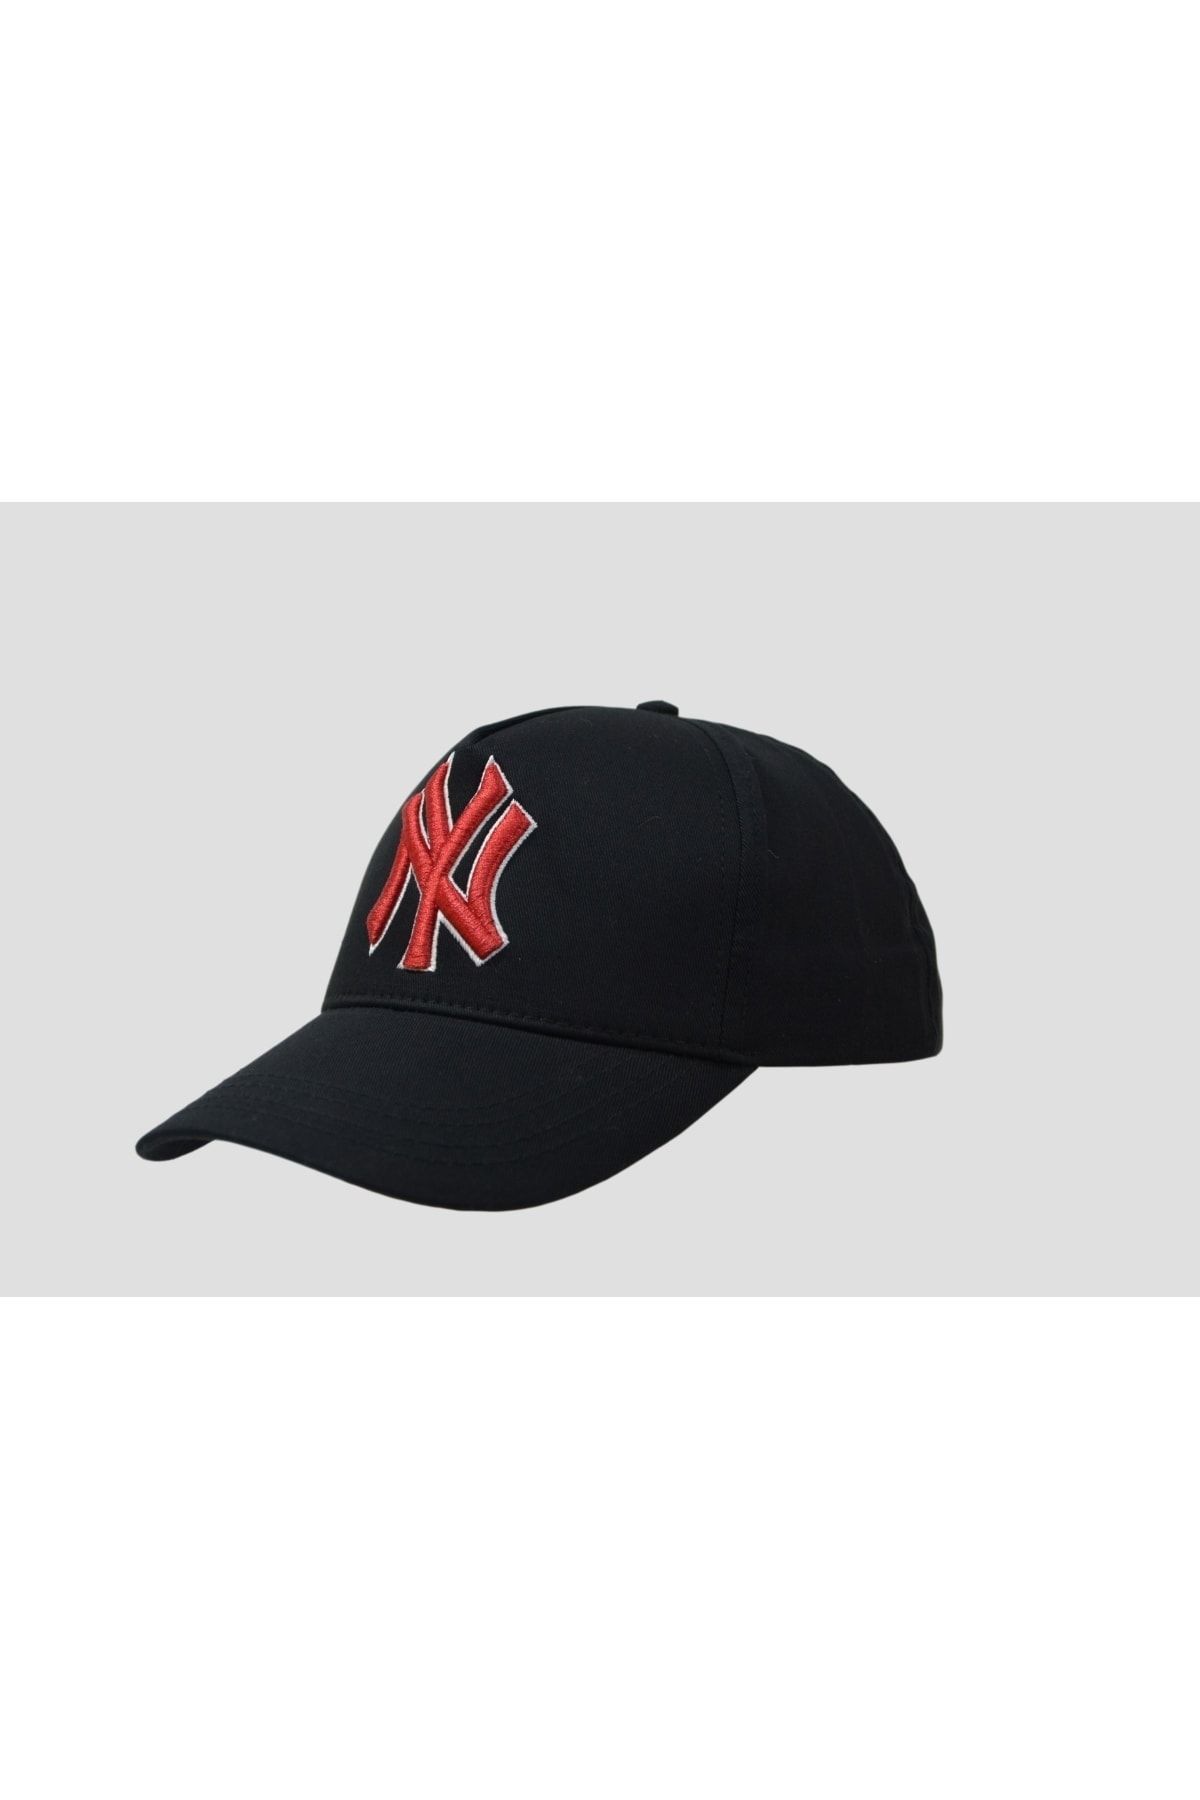 Nacar Unisex Siyah Ny New York Özel Kırmızı Nakış Şapka